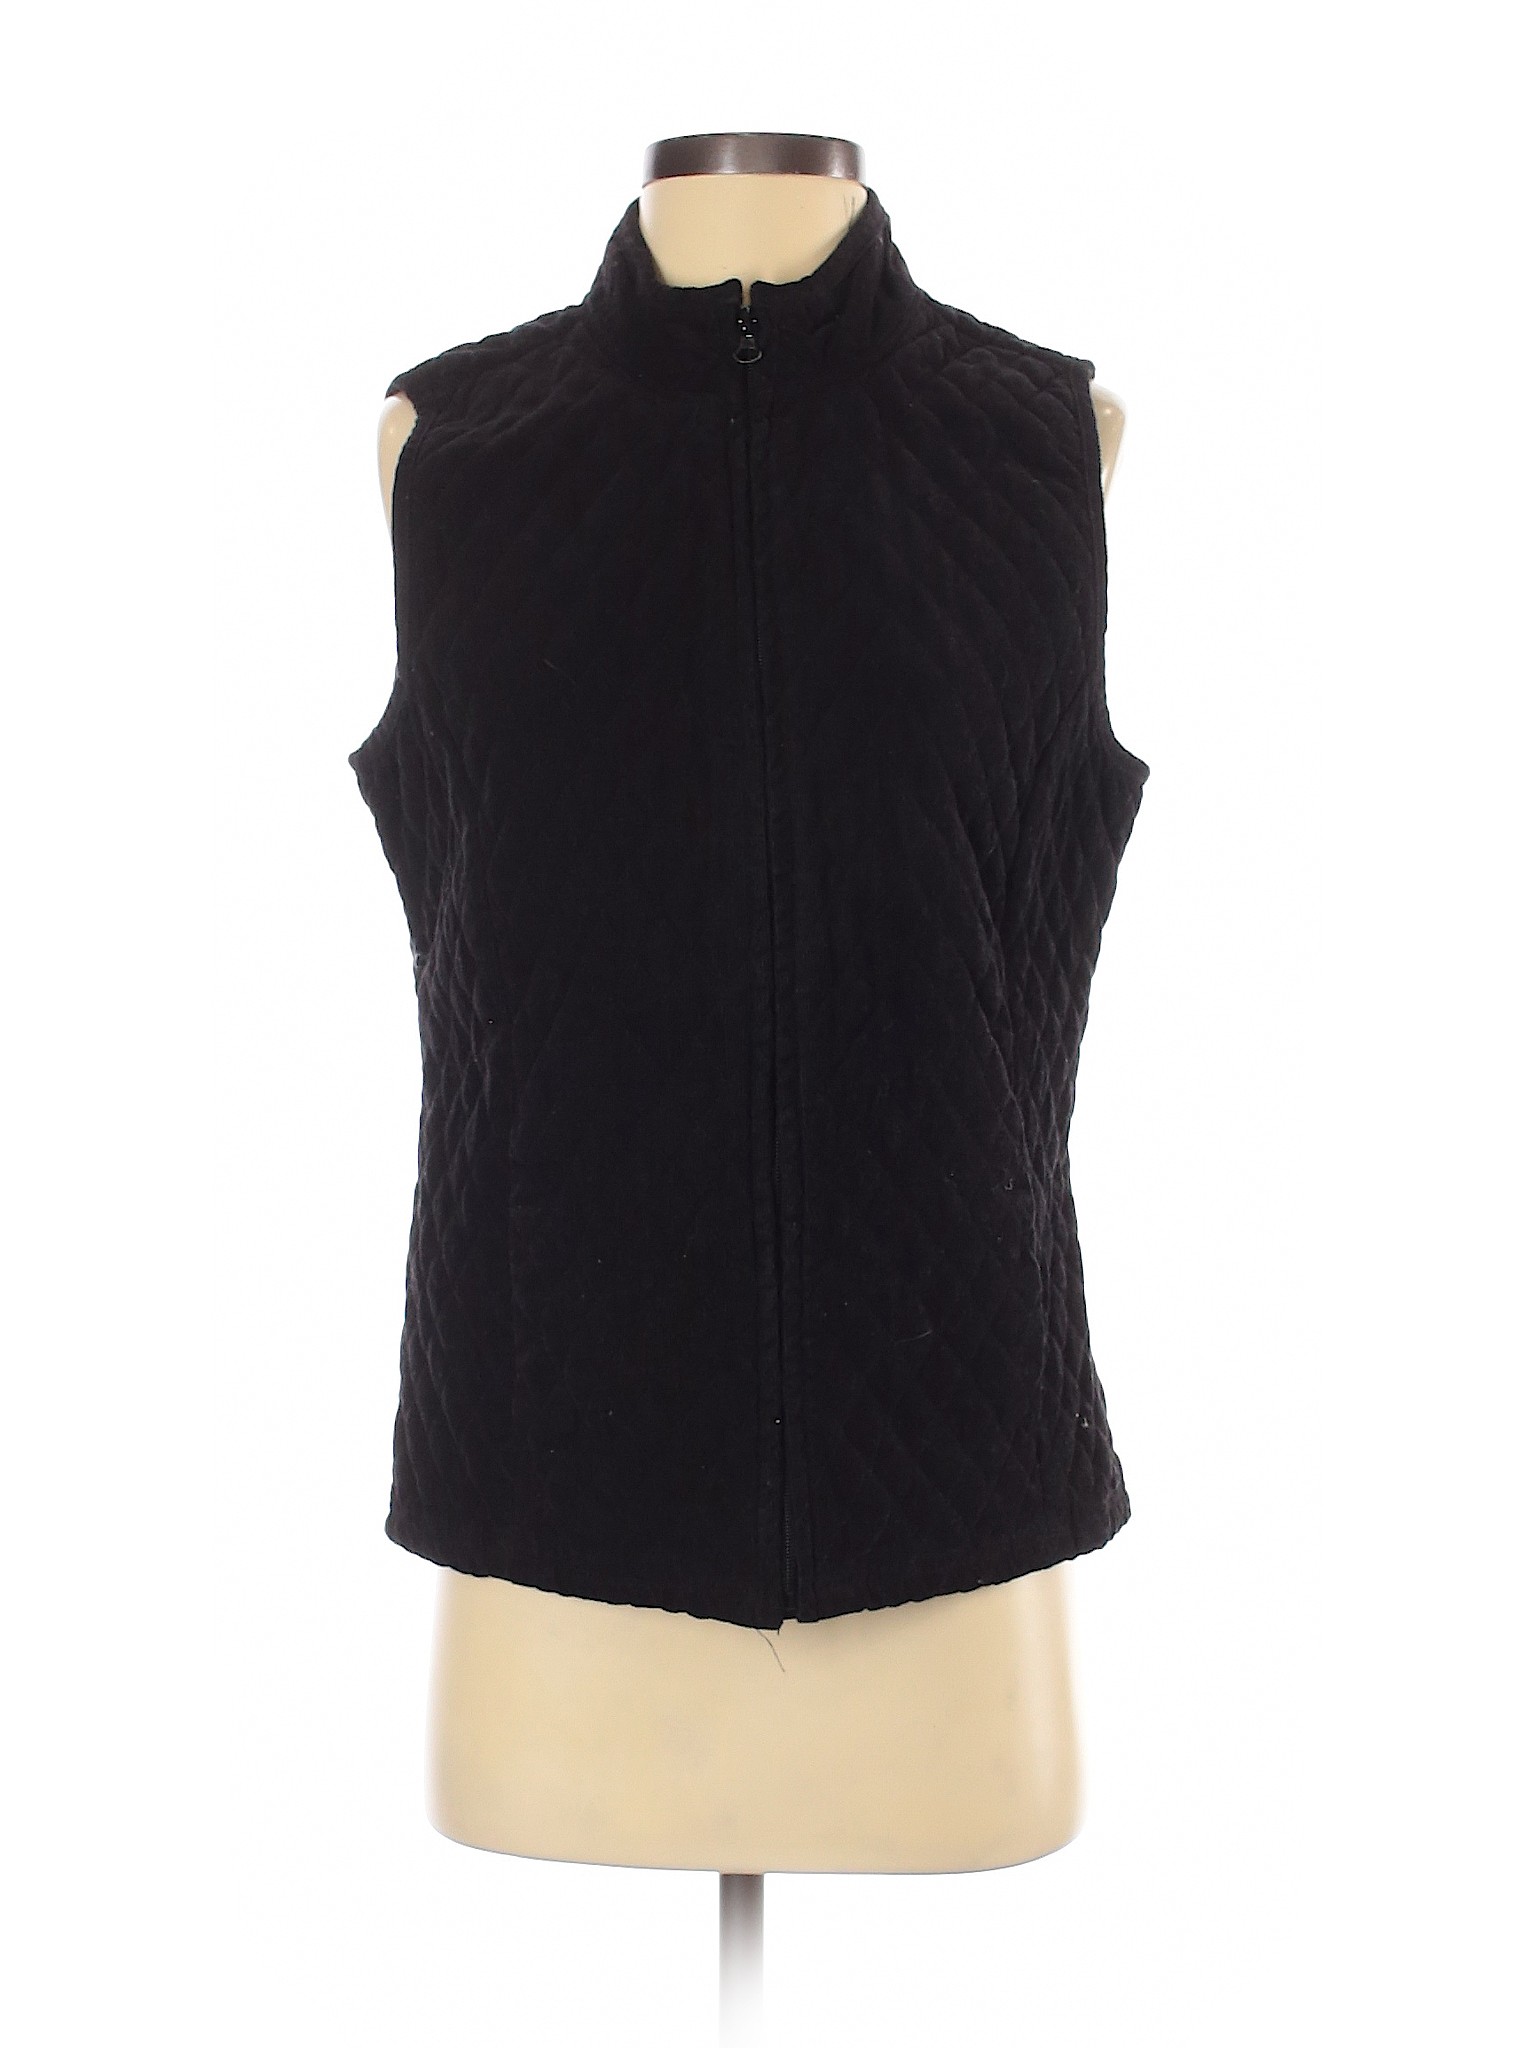 Basic Editions Women Black Vest S | eBay